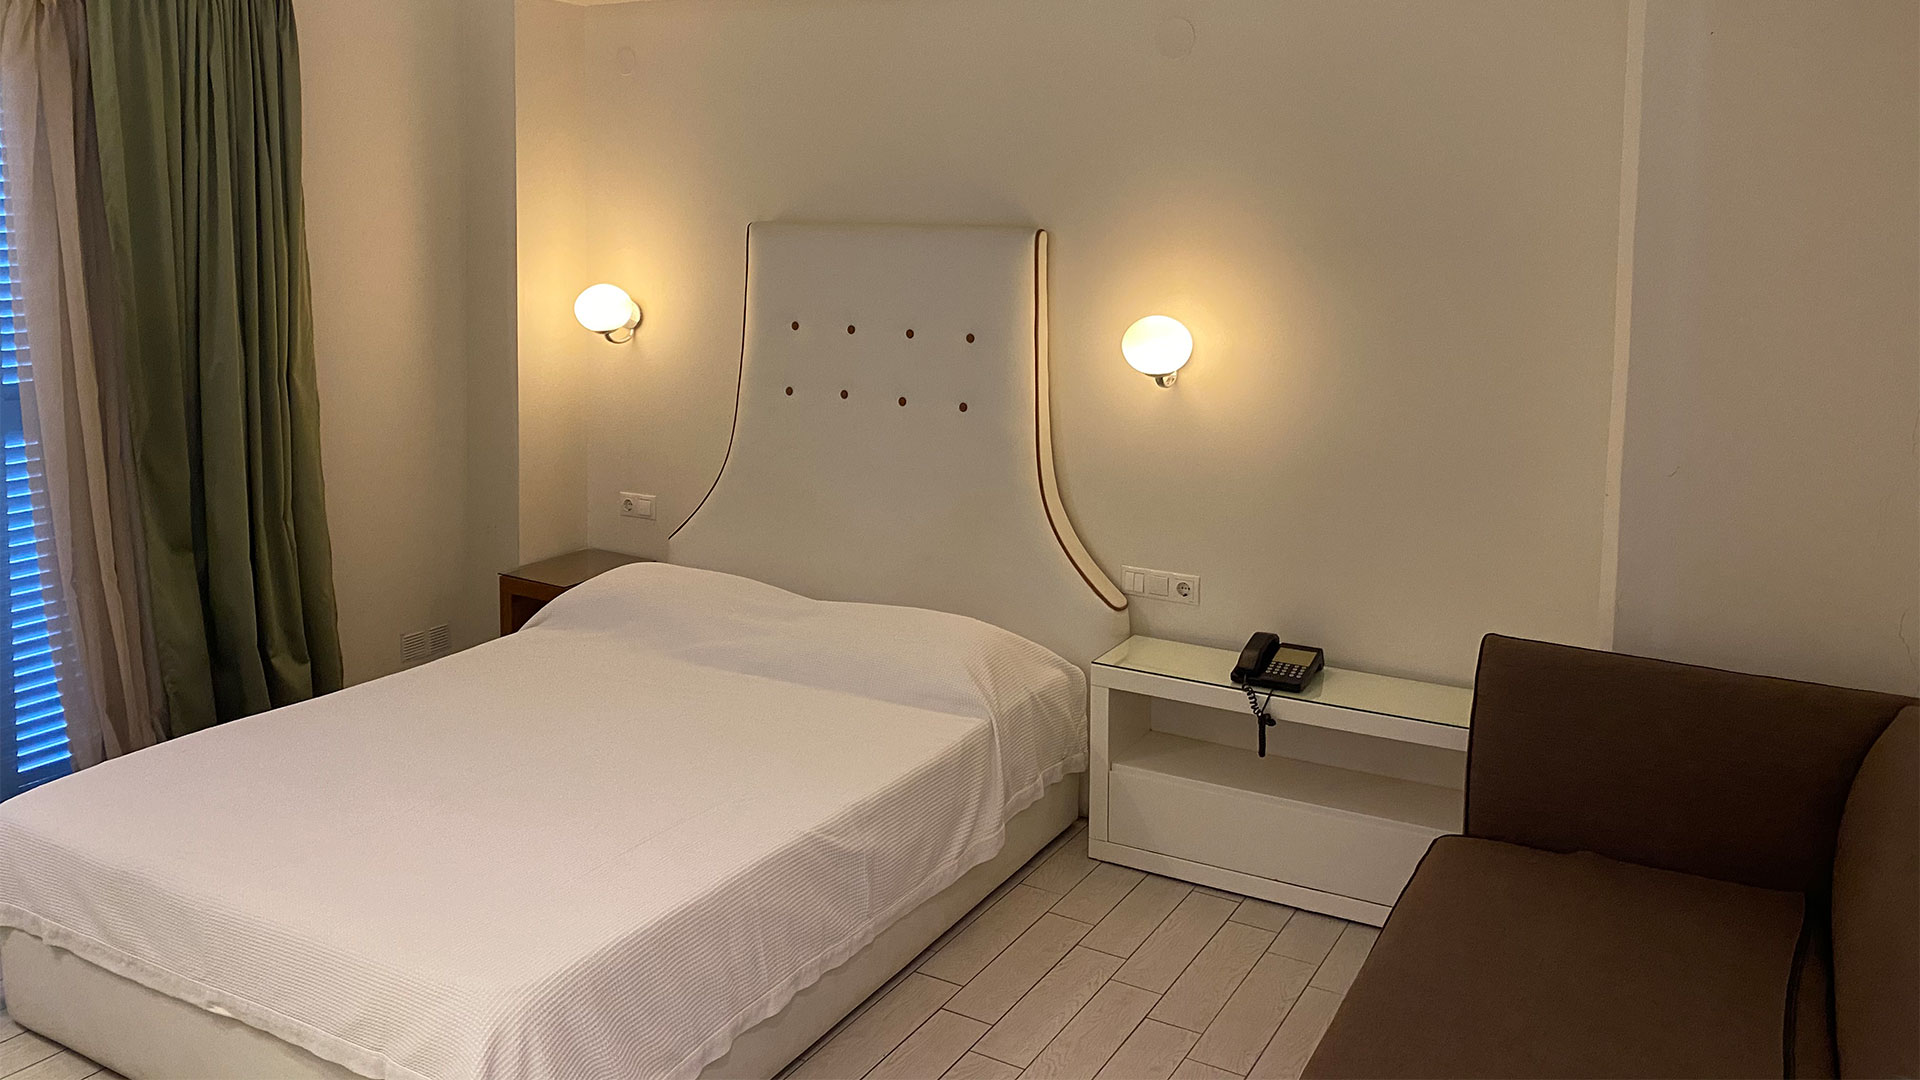 Hotel Anais quadruple room.jpg